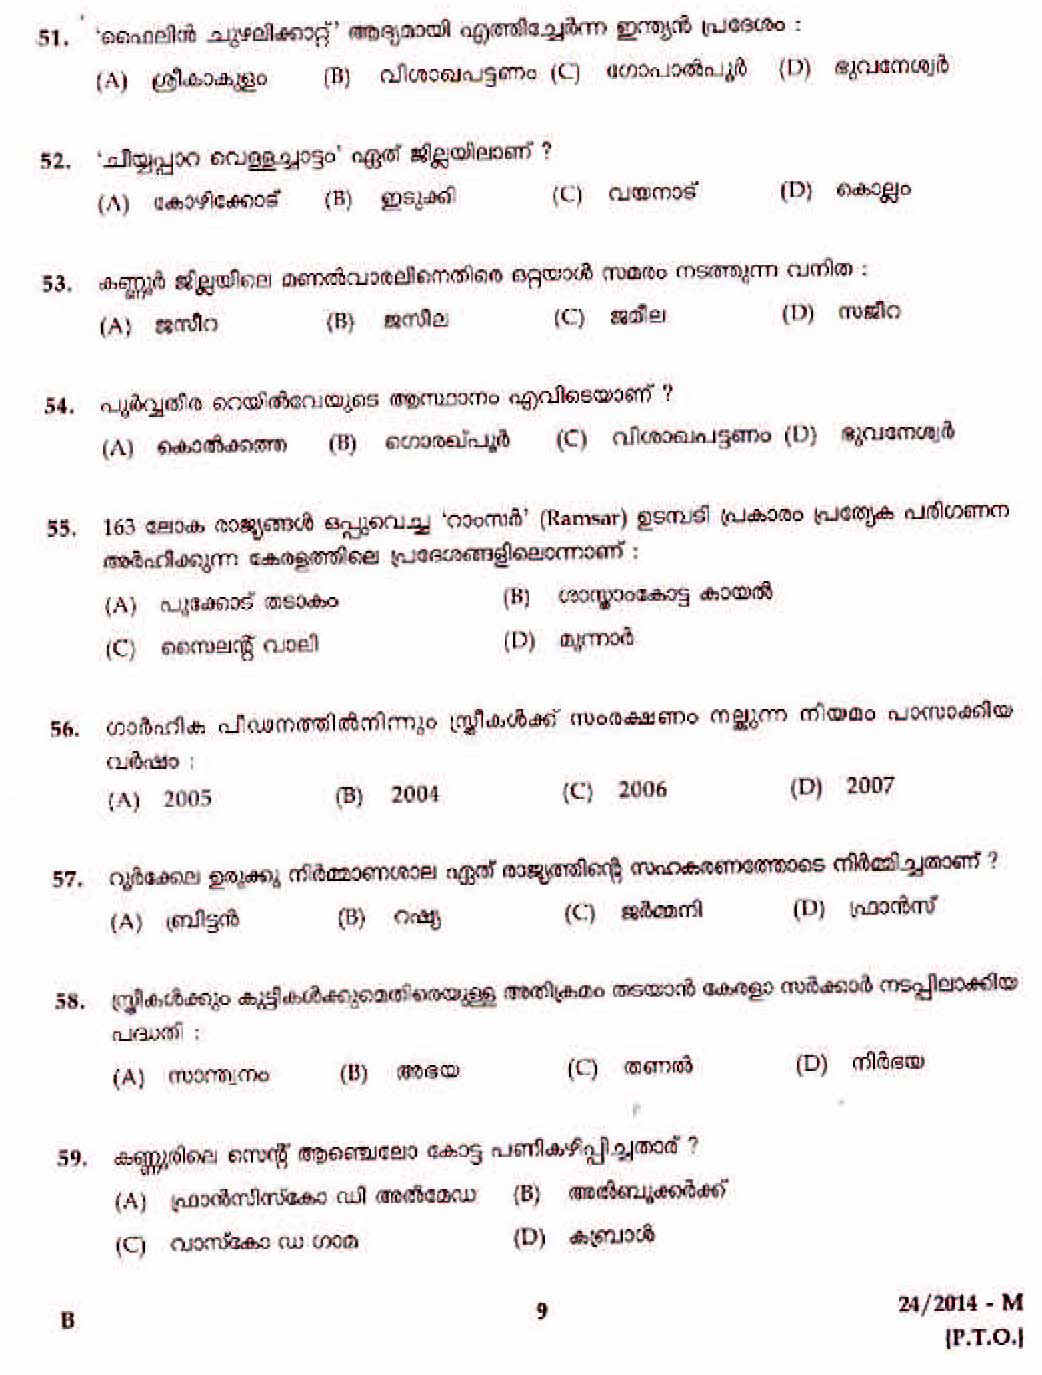 LD Clerk Malappuram Question Paper Malayalam 2014 Paper Code 242014 M 5